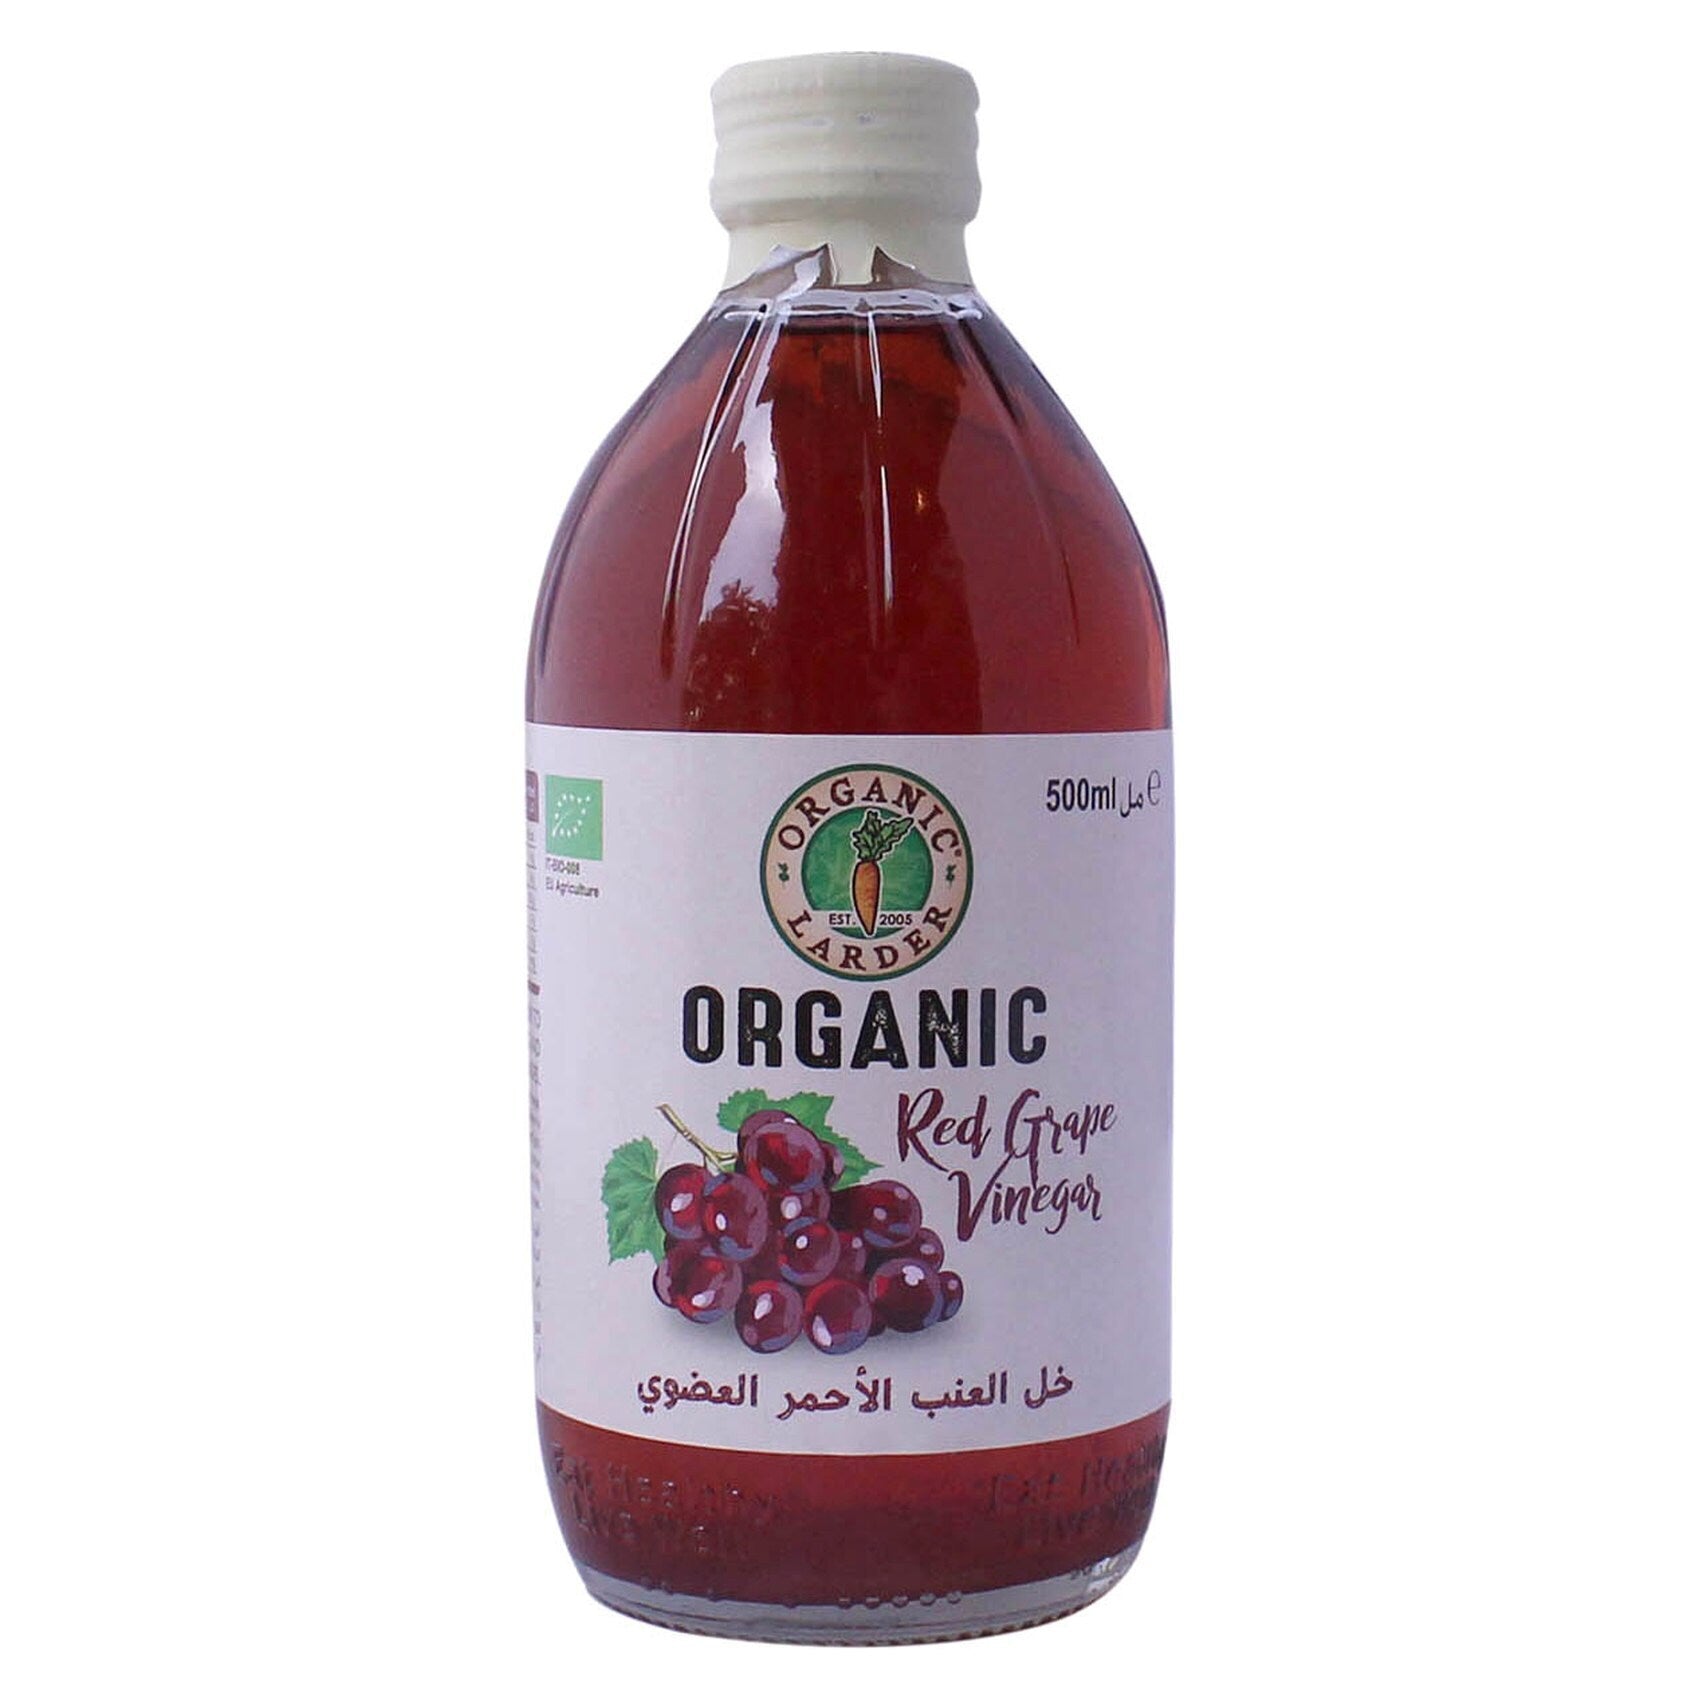 ORGANIC LARDER Organic Red Grape Vinegar, 500ml - Organic, Vegan, Natural